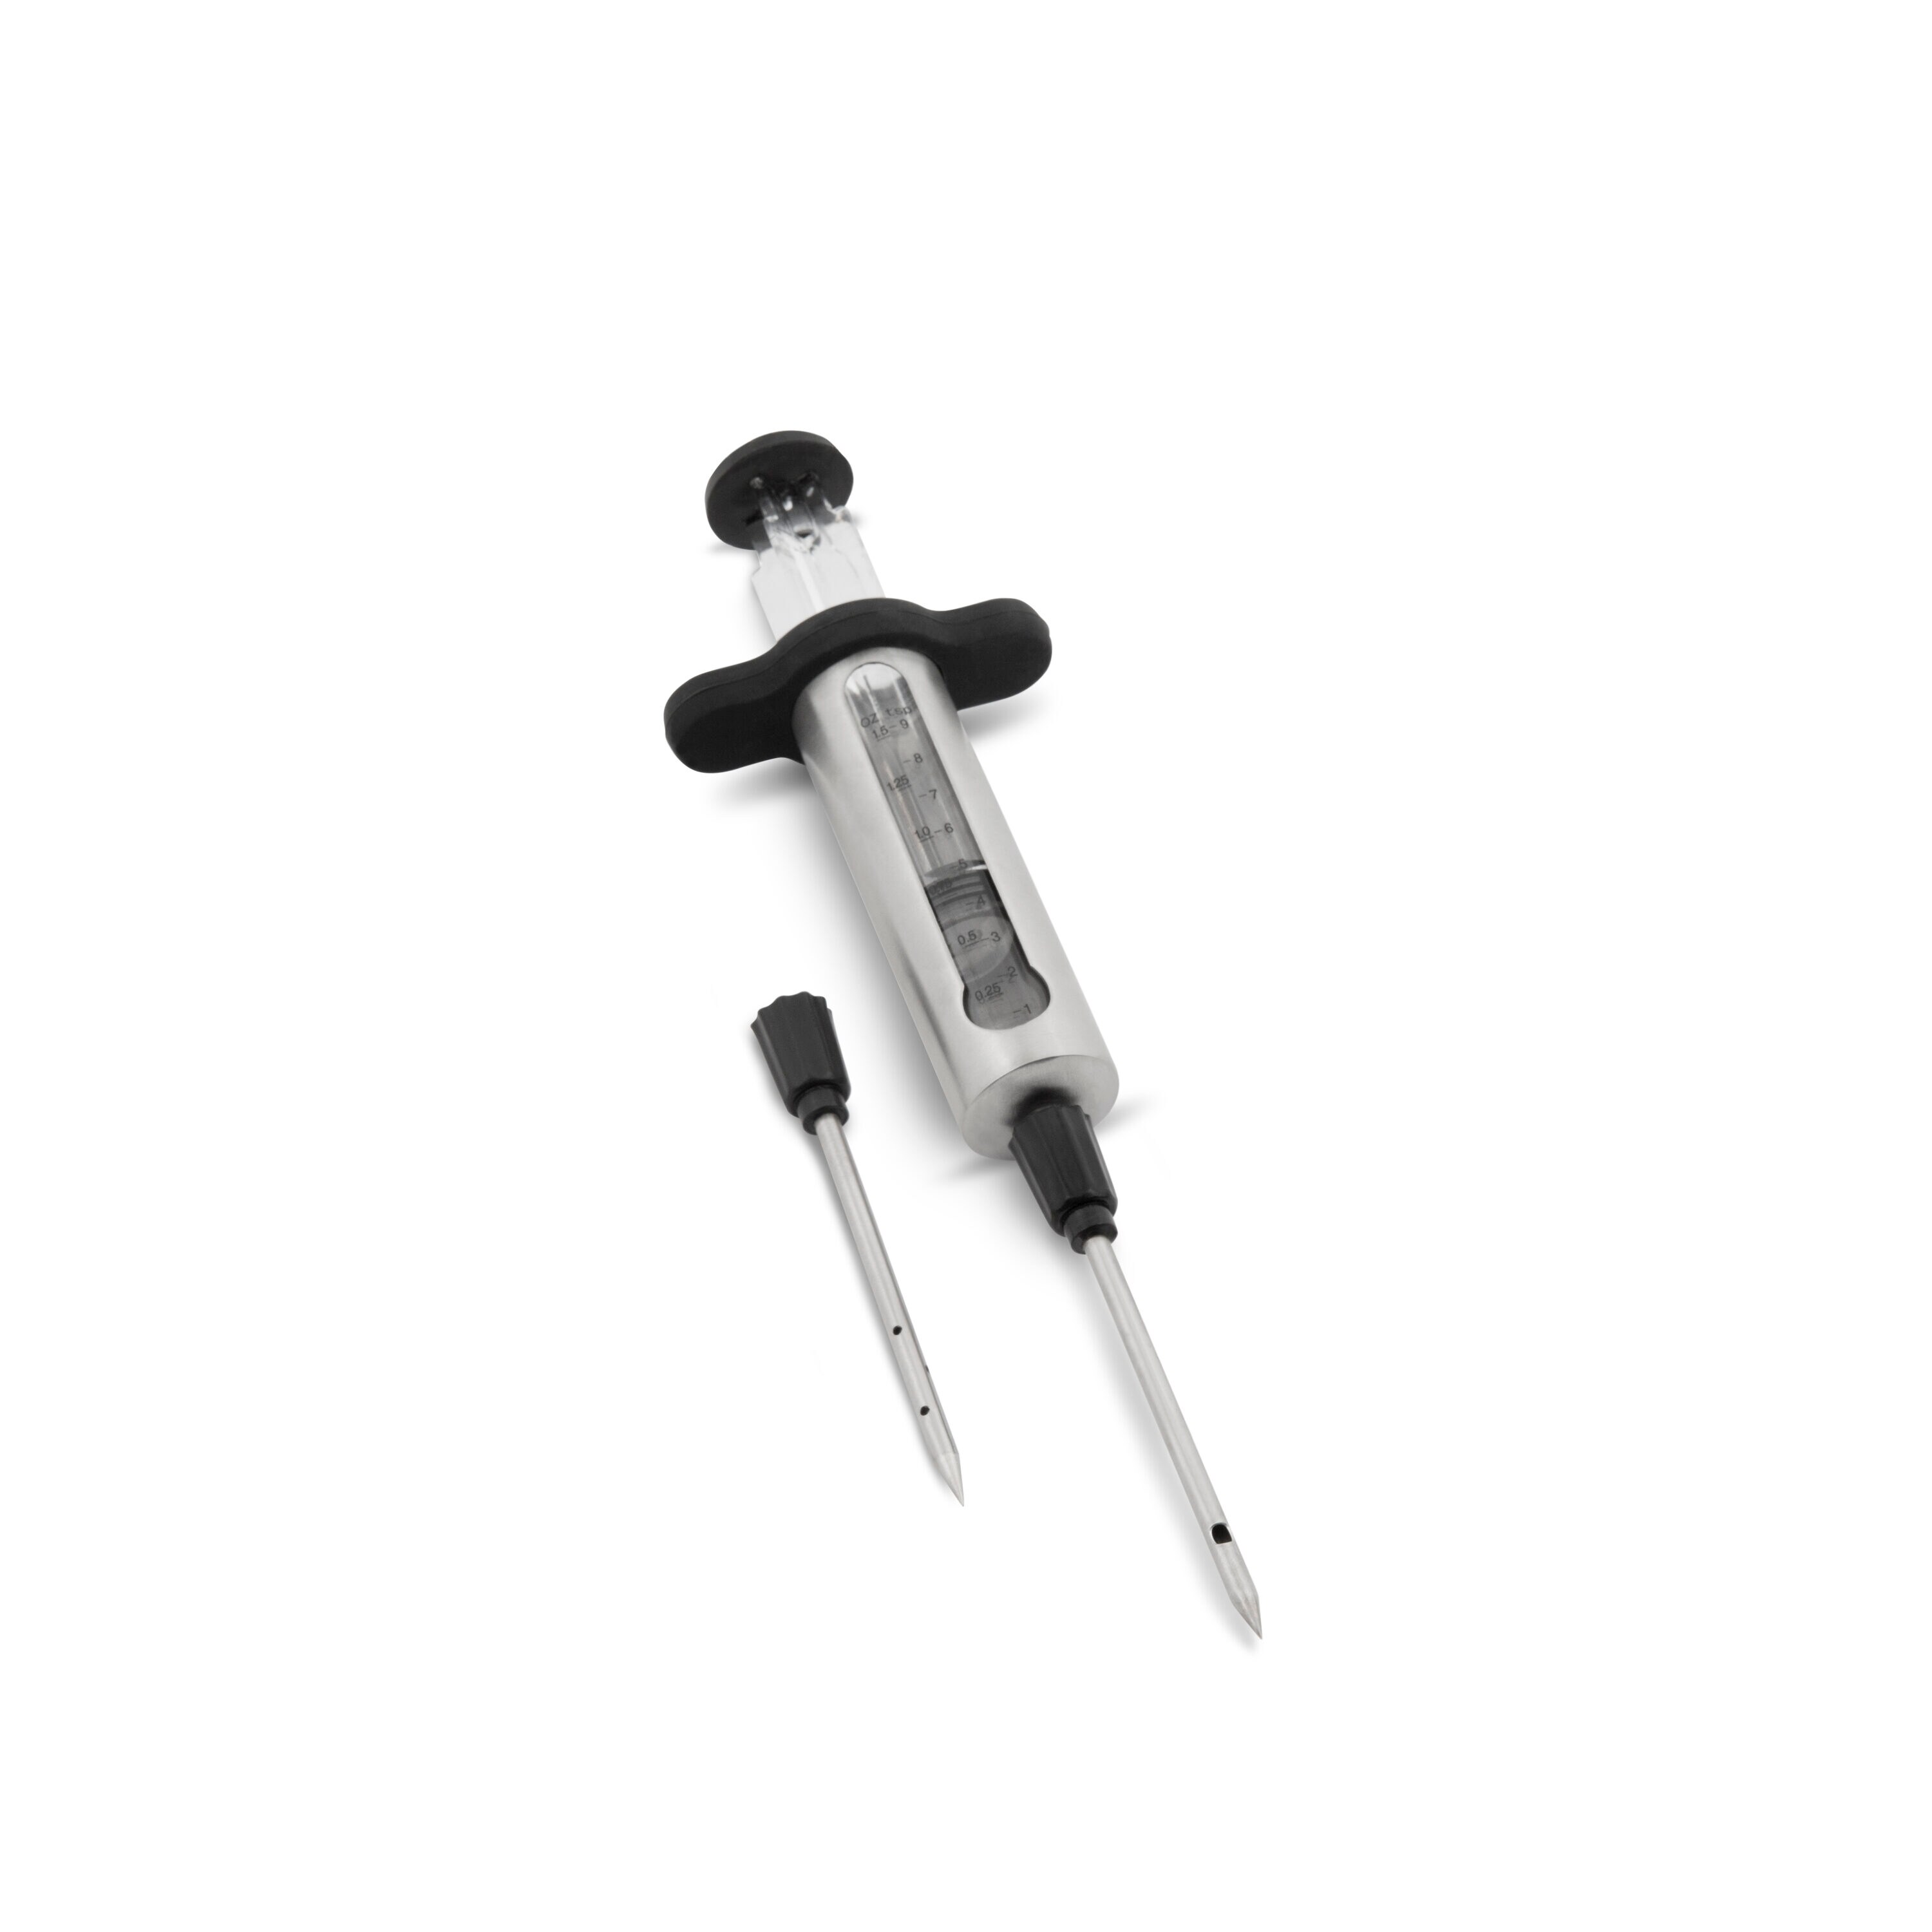 Marinade Meat Injector Syringe - Uptimac